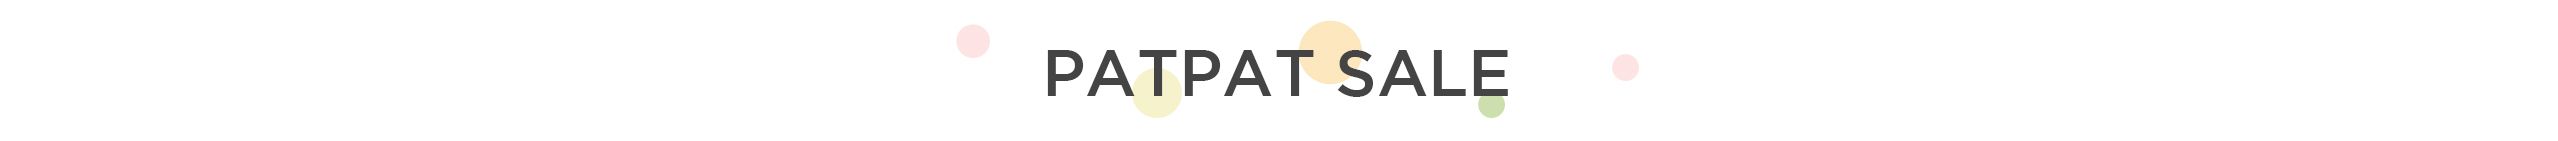 PatPat Image